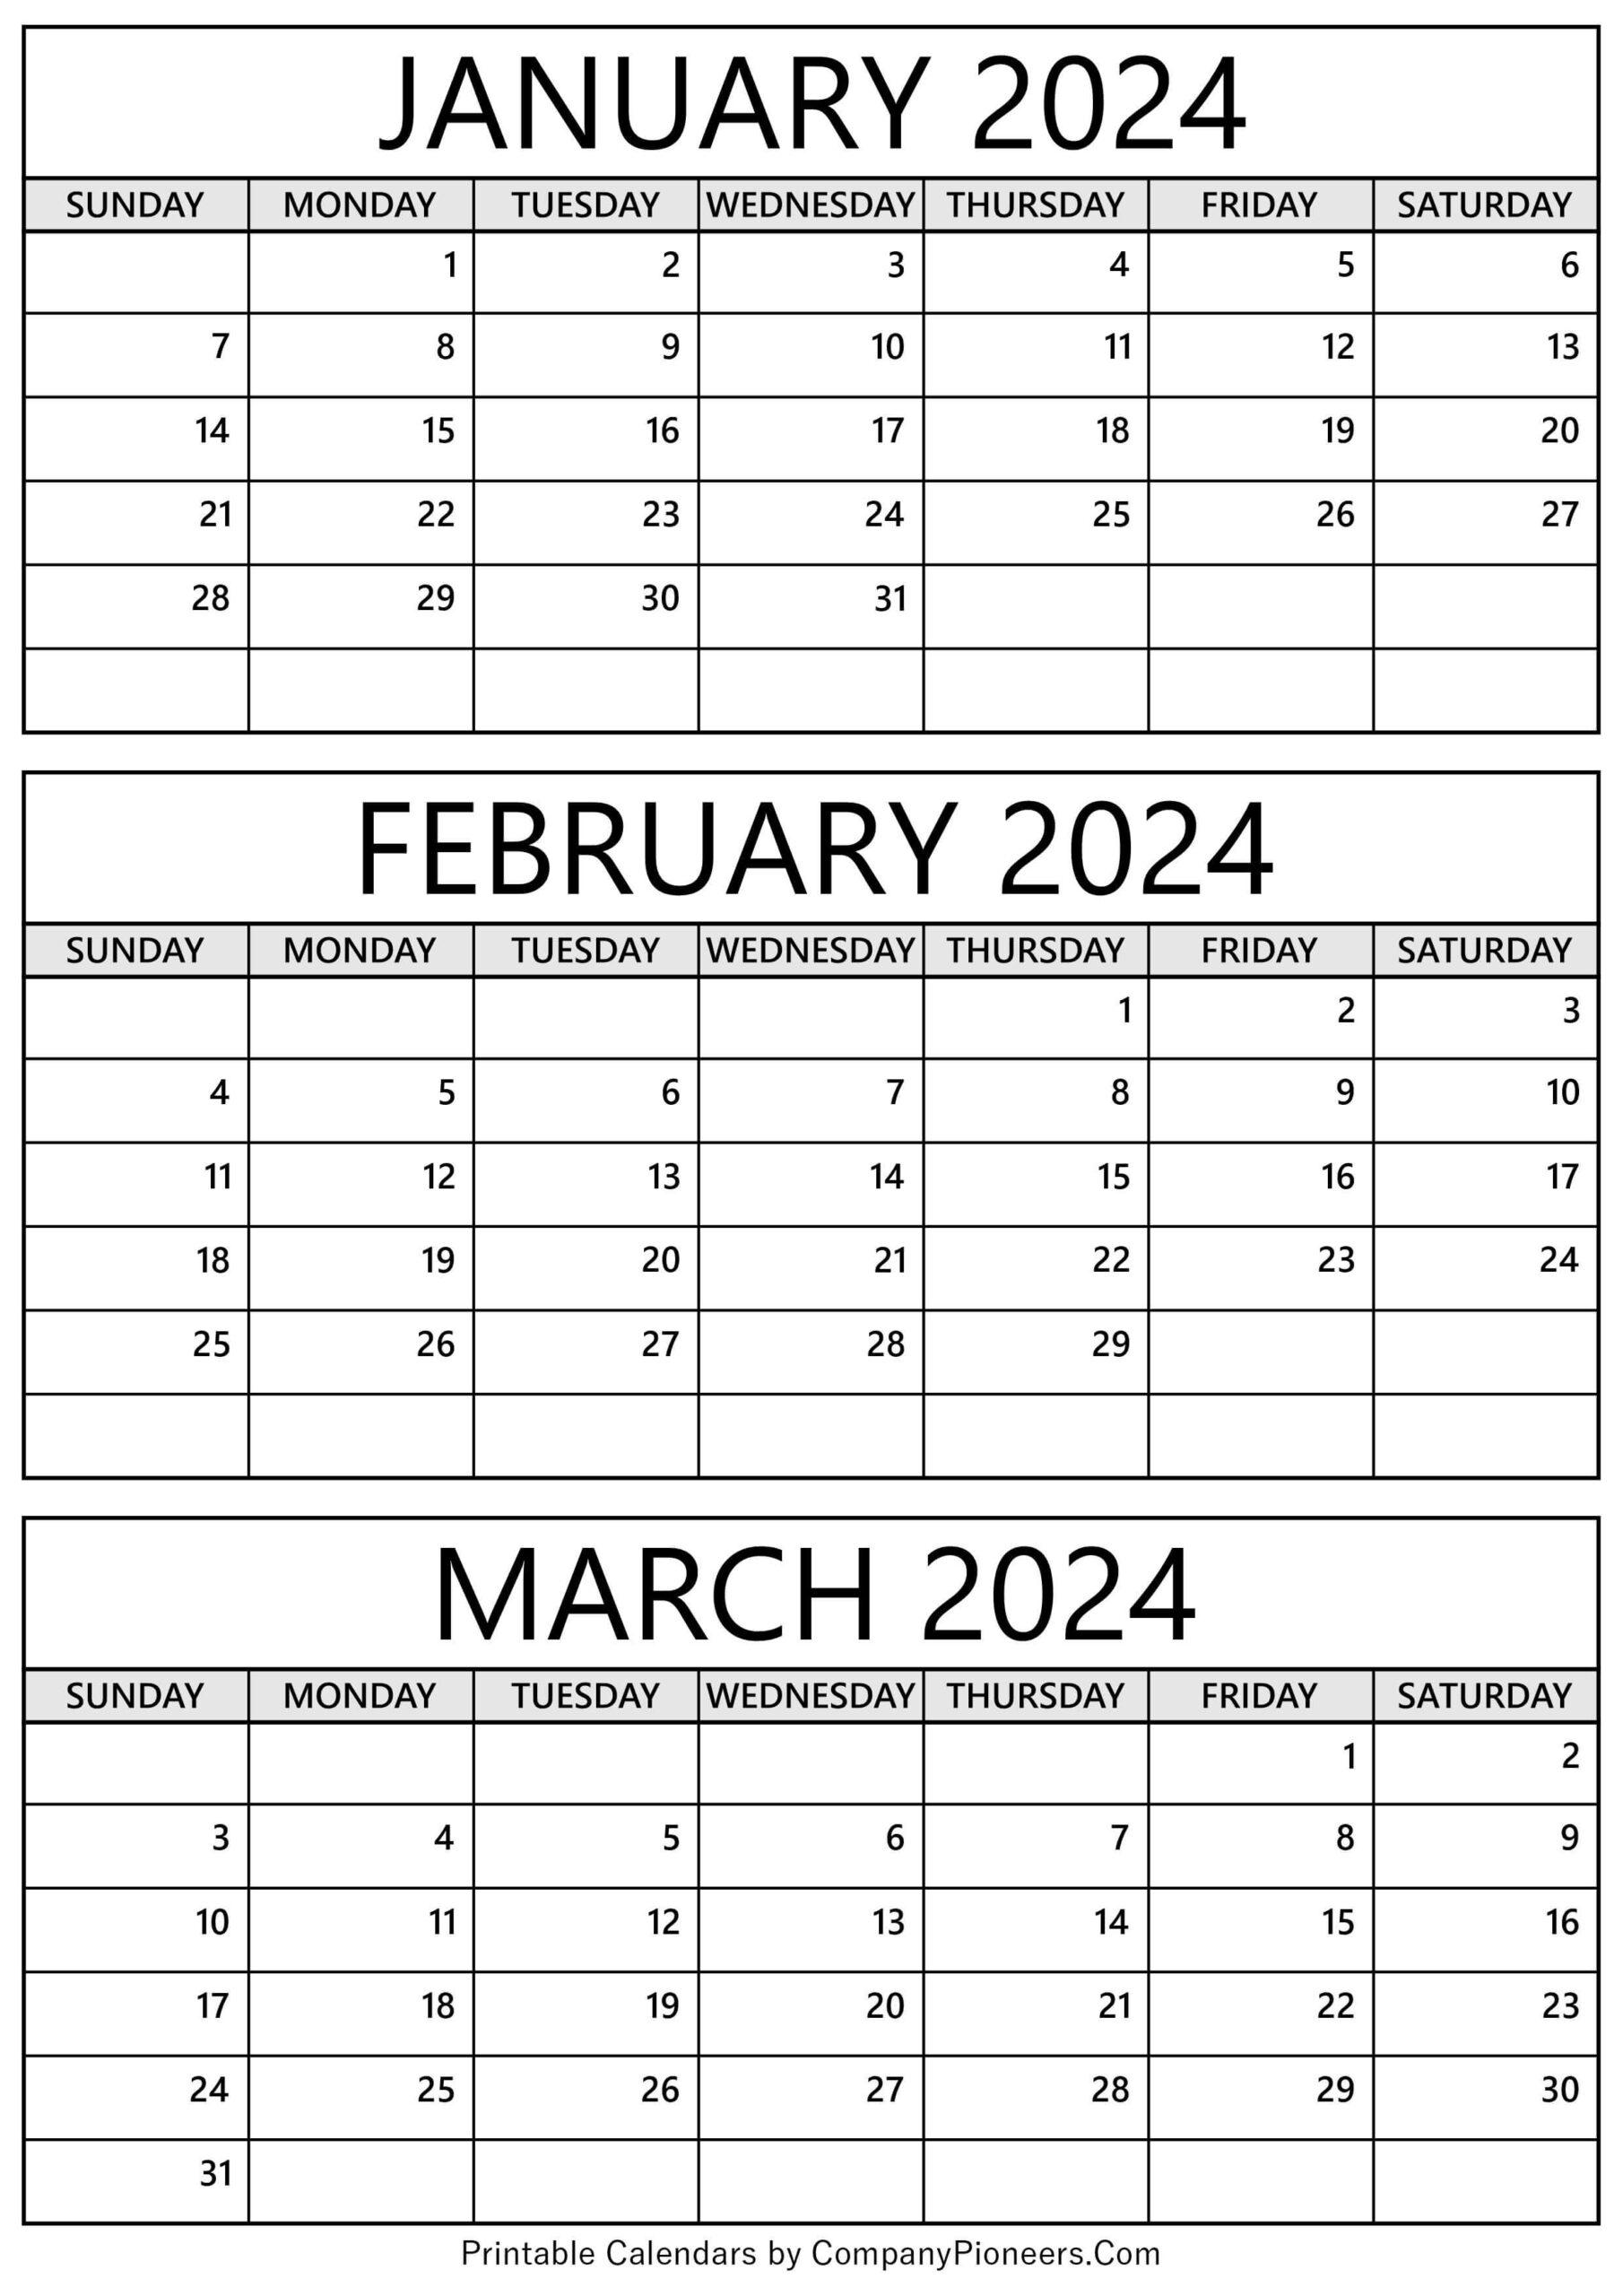 January February March 2024 Calendar Printable - Template for Jan Feb Mar 2024 Calendar Printable